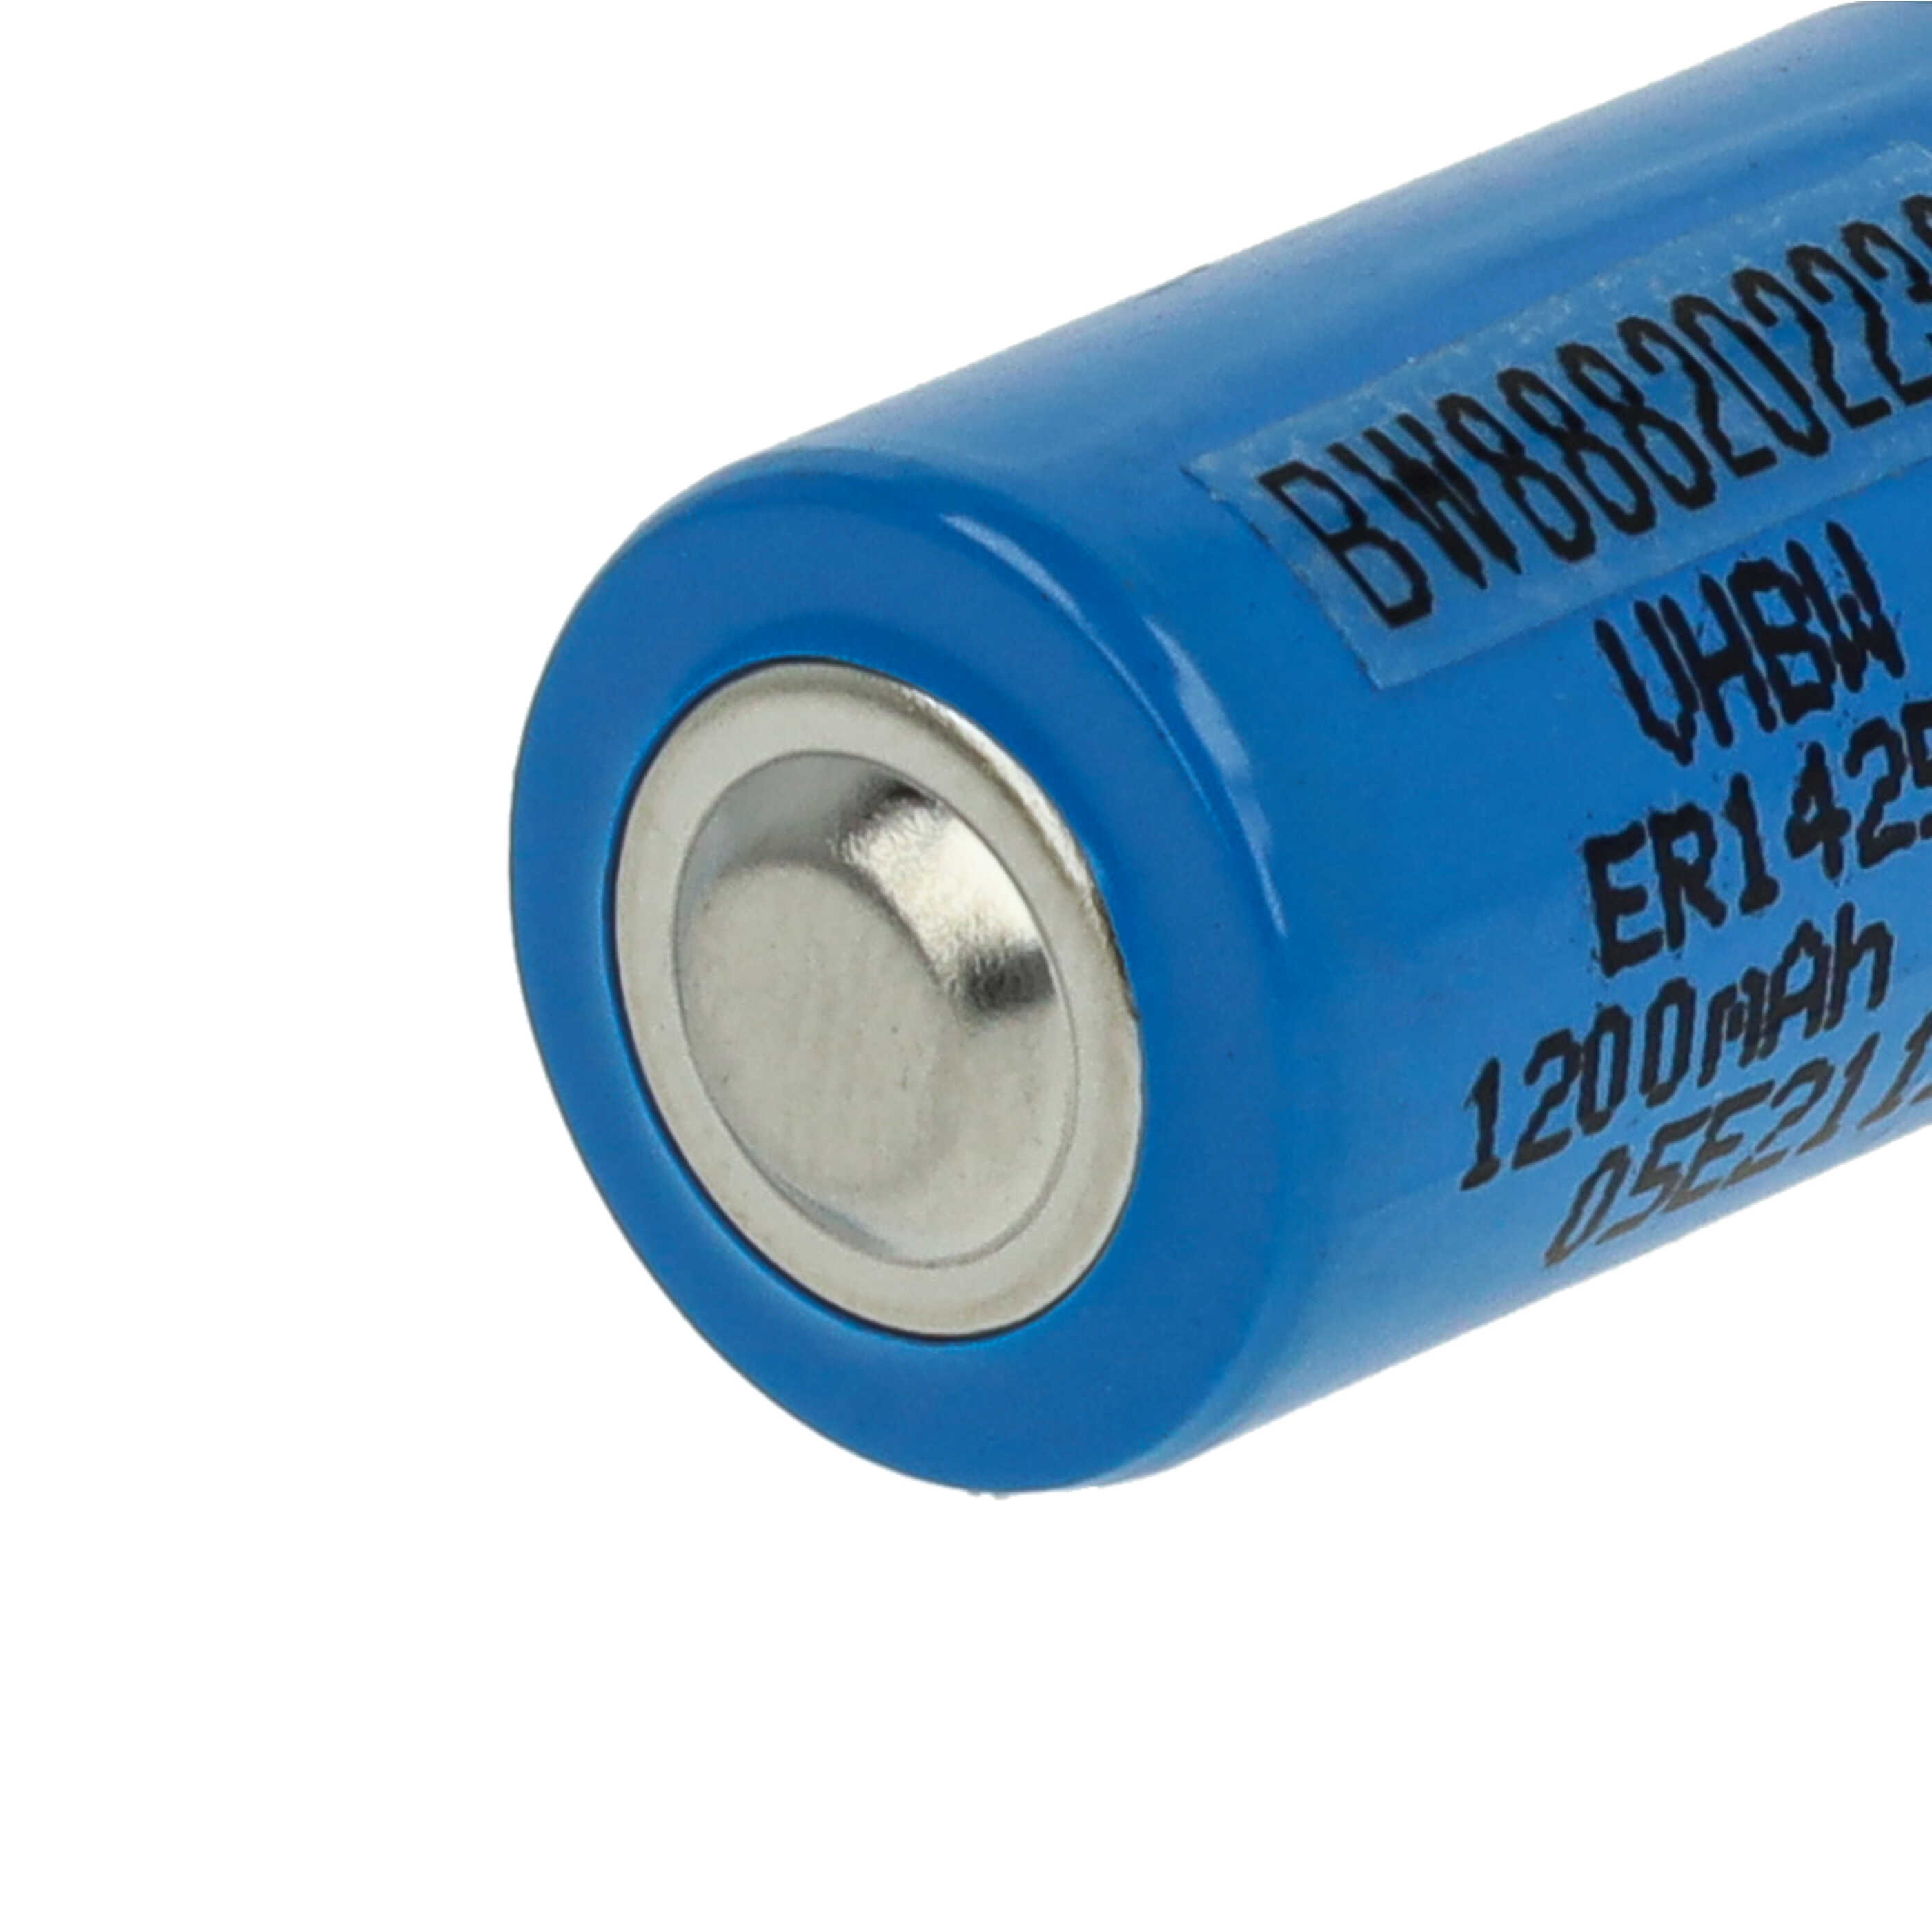 ER14250 Premium Battery Replacement for 1/2AA, 1770-XZ, 3B26, 418-0076, 60-0576-100 - 1200mAh 3.6V Li-SOCl2